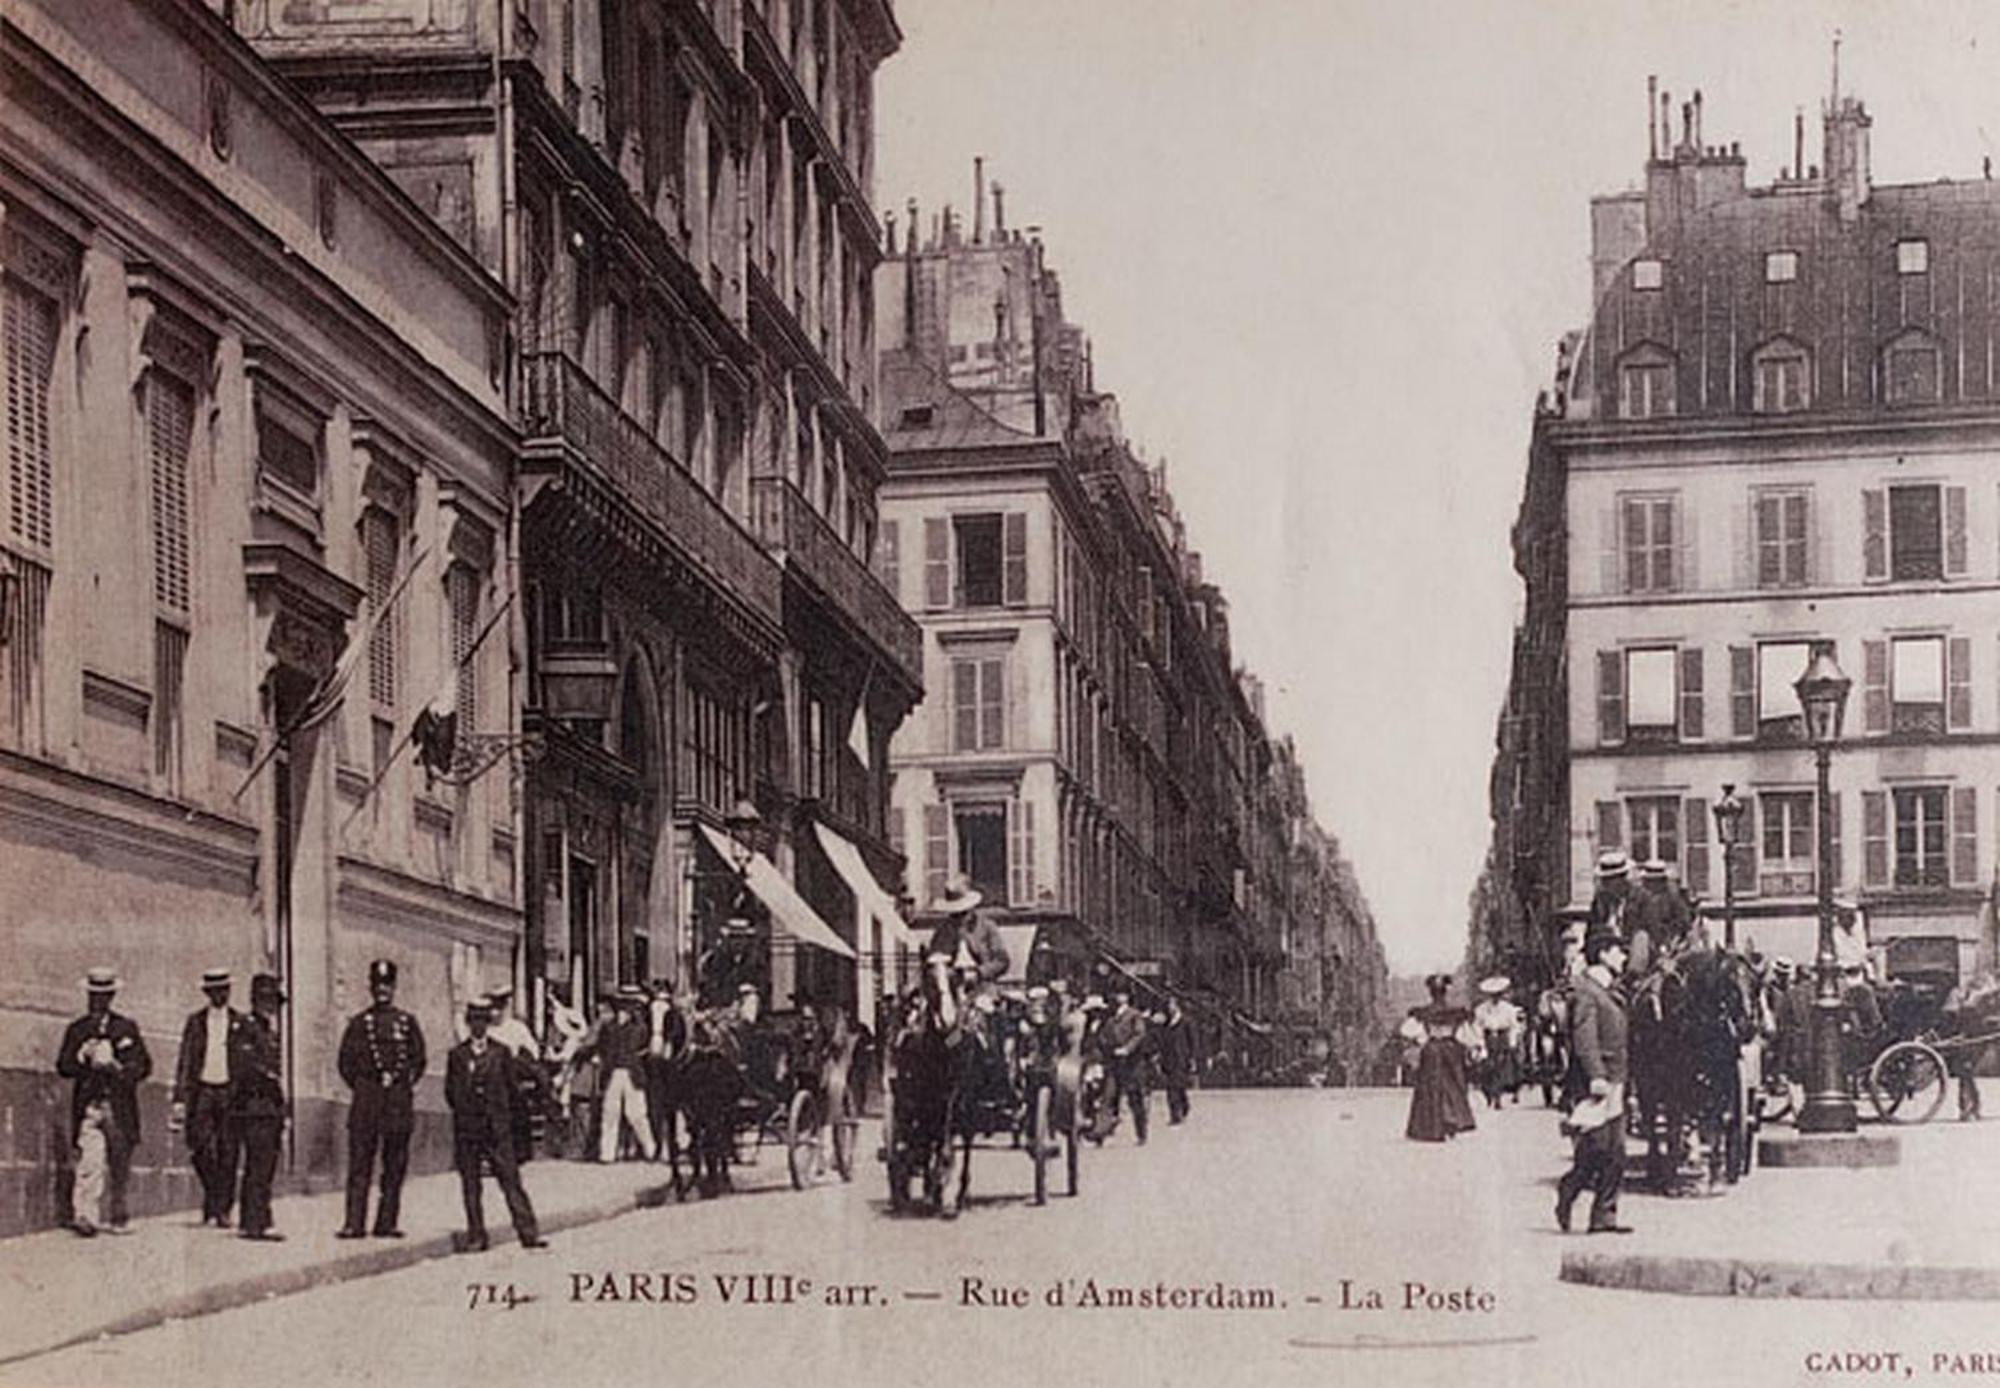 Opera Deauville Paris Eksteriør billede